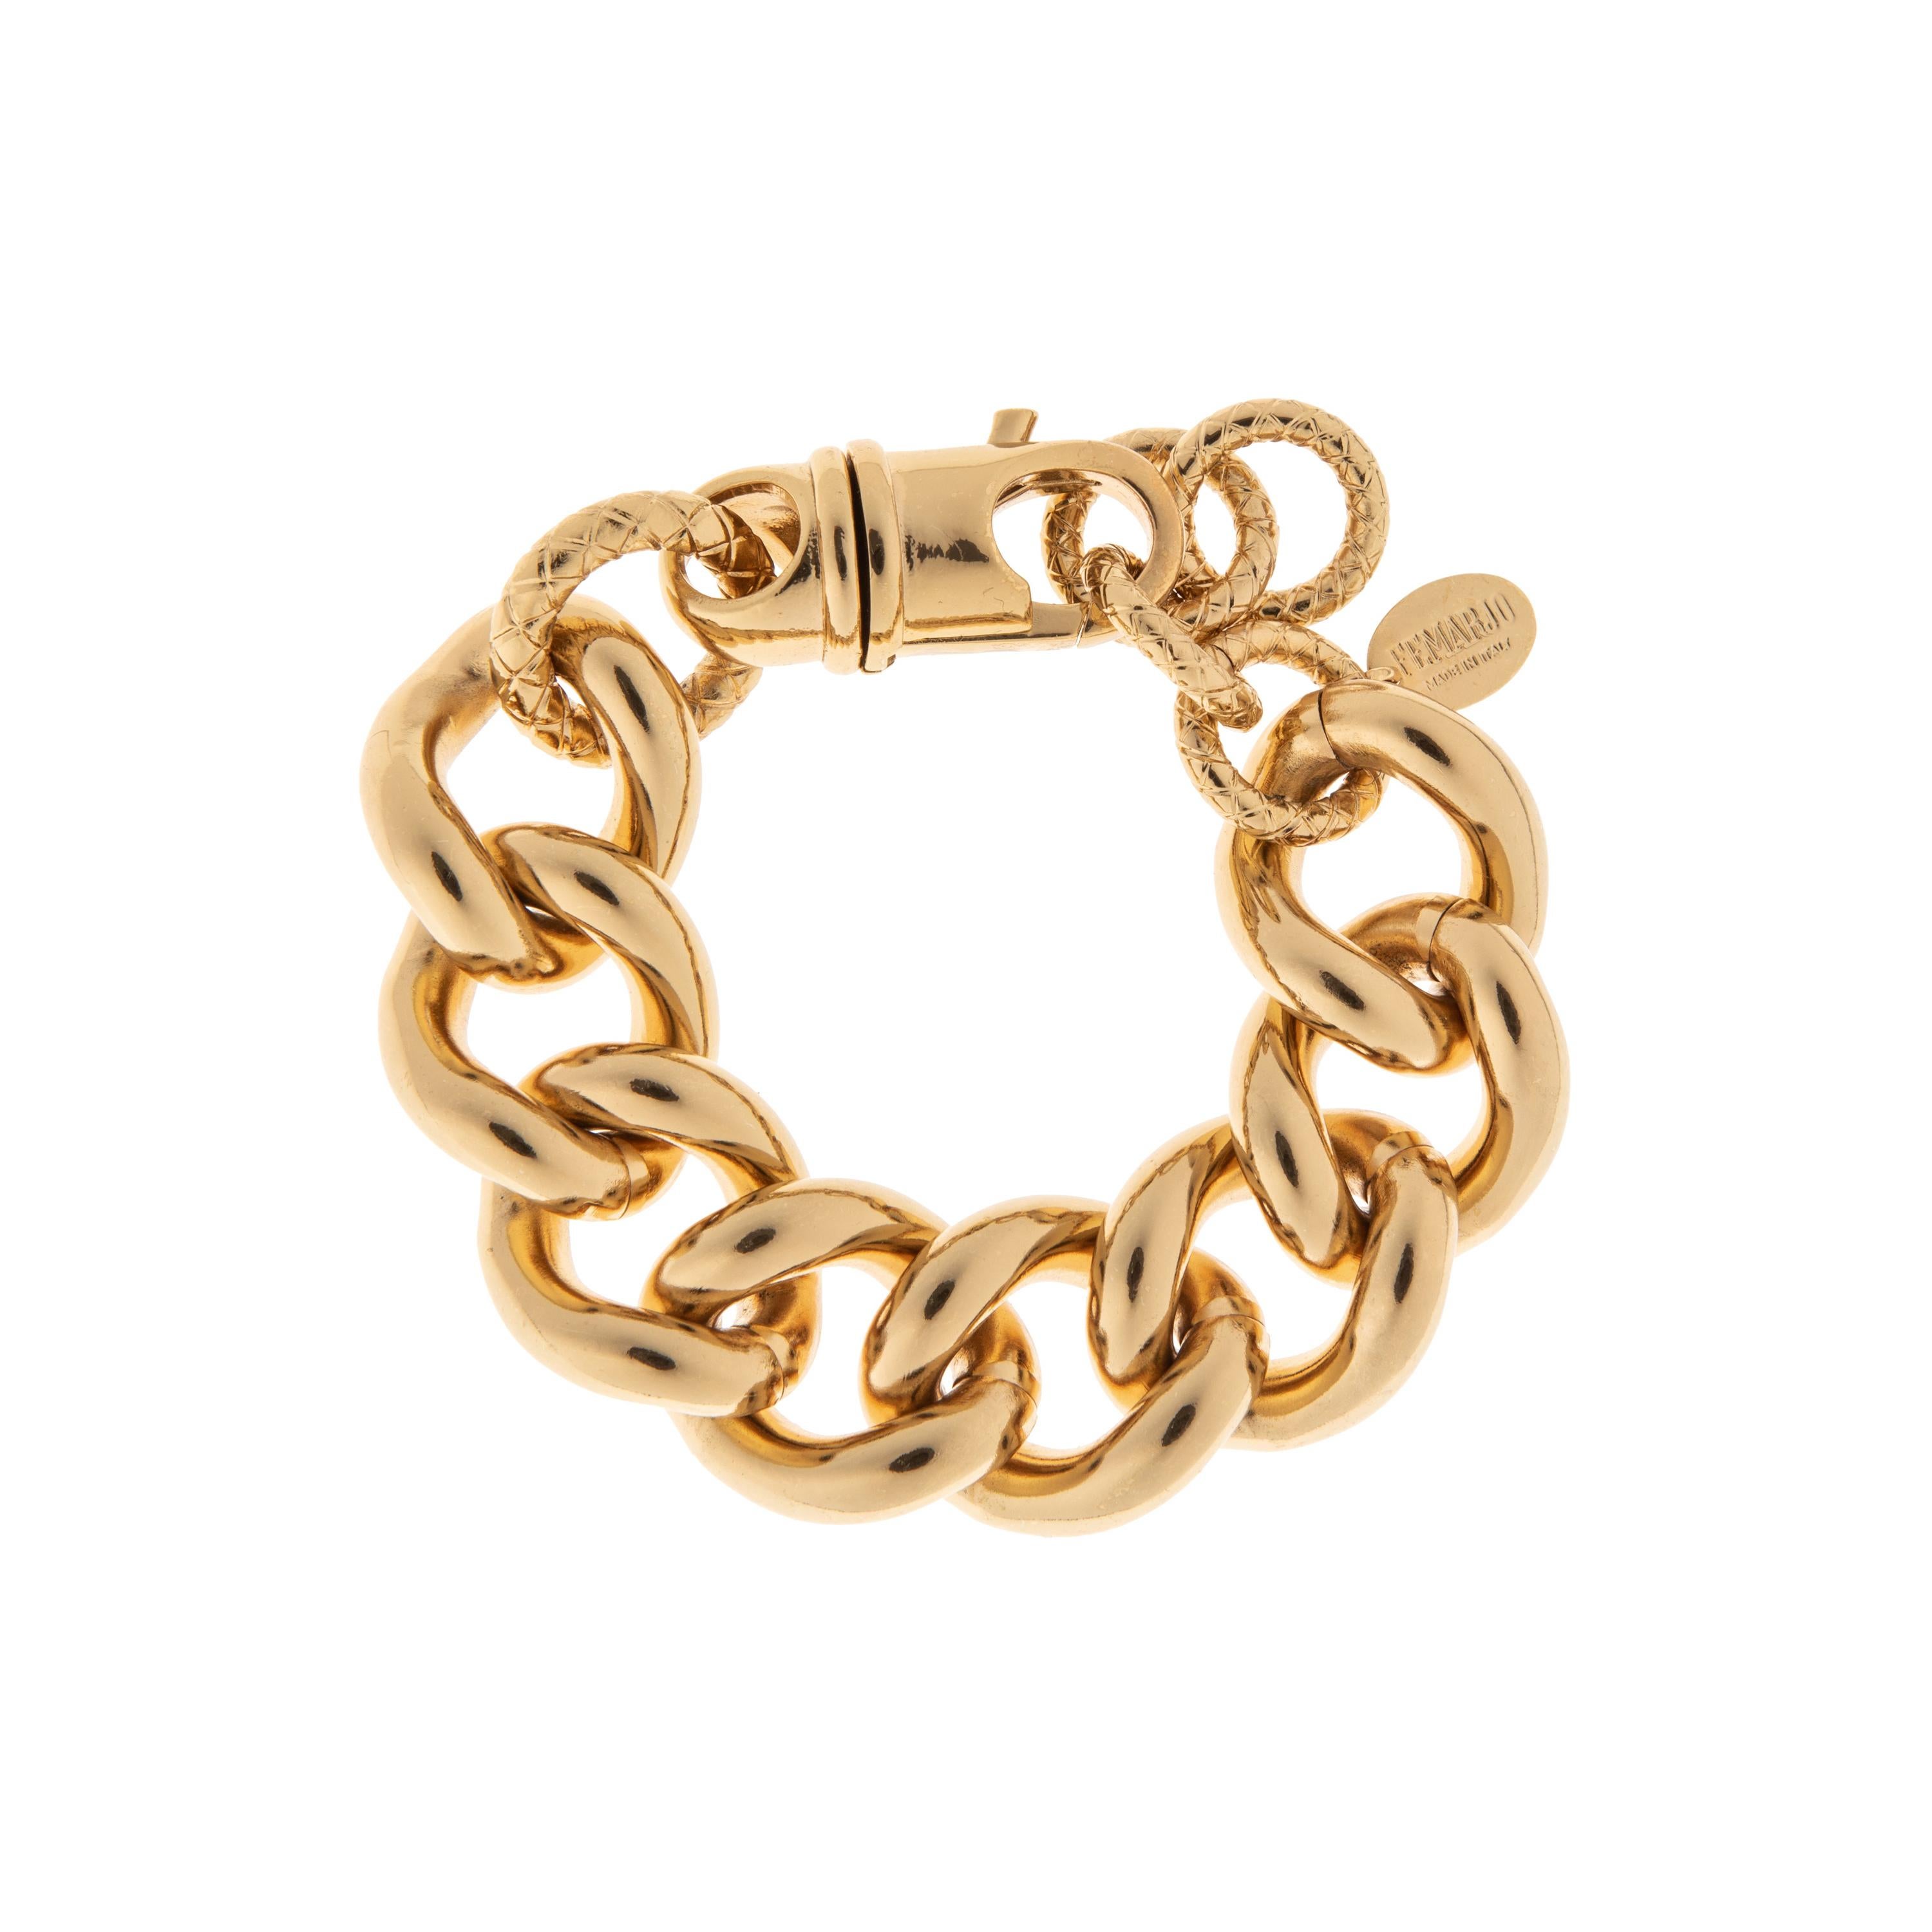 24Kt gold plated brass chain bracelet NWOT